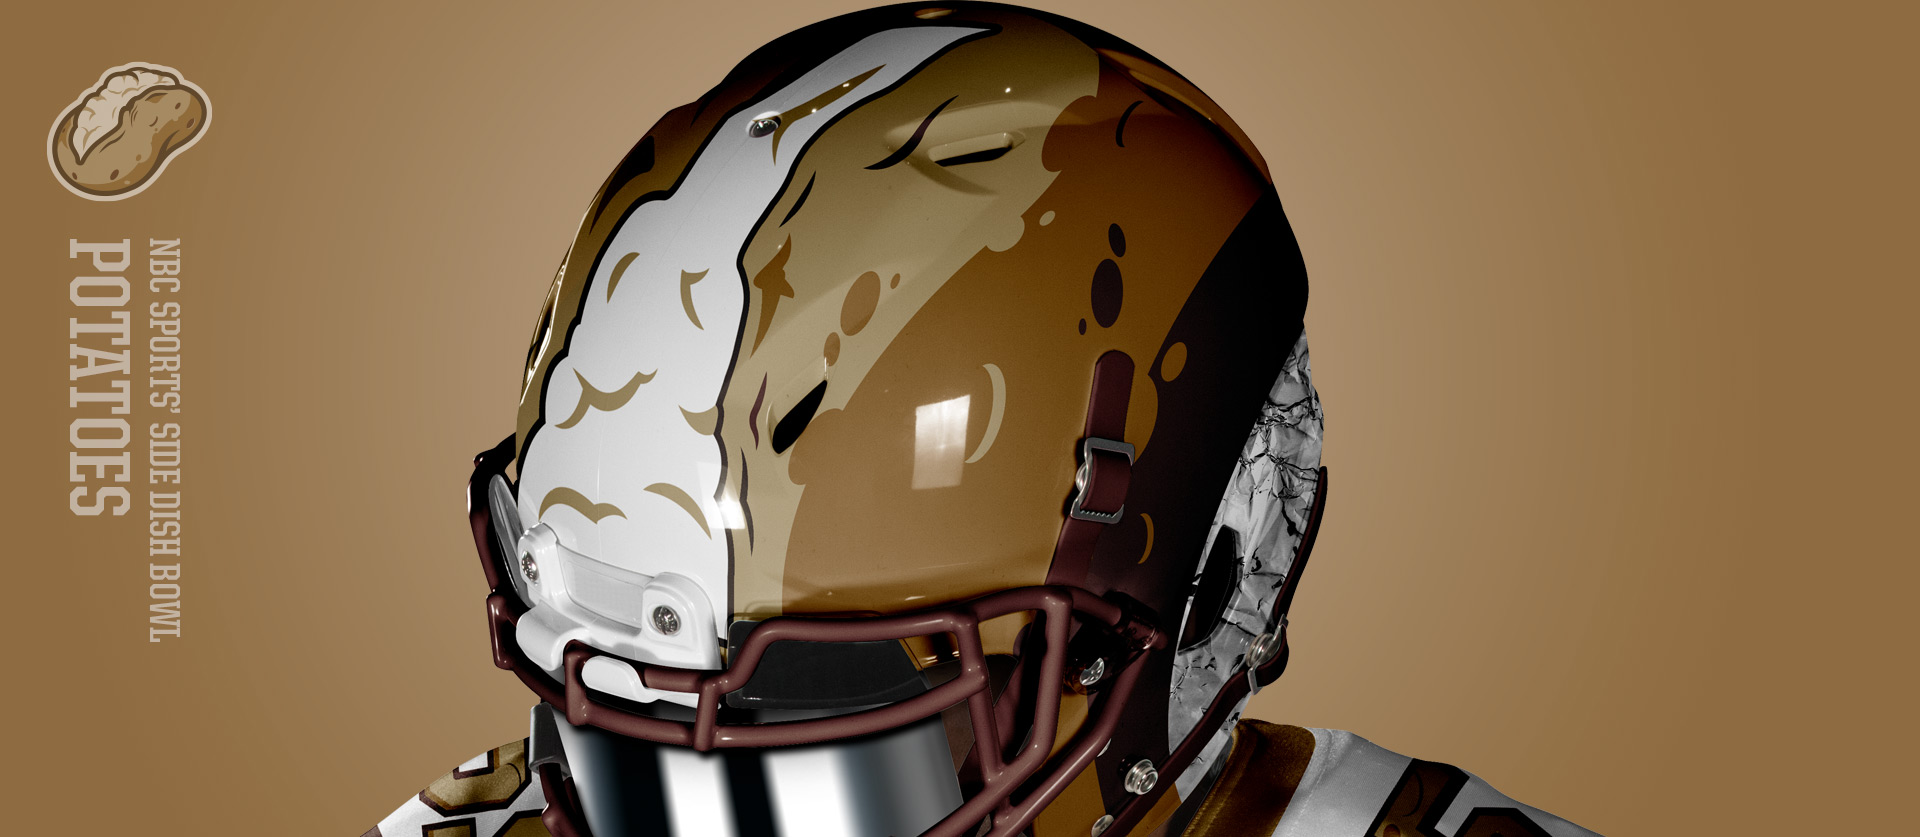 Potatoes Helmet Side View - Football Uniform Design for NBC Sports Thanksgiving Side Dish Bowl